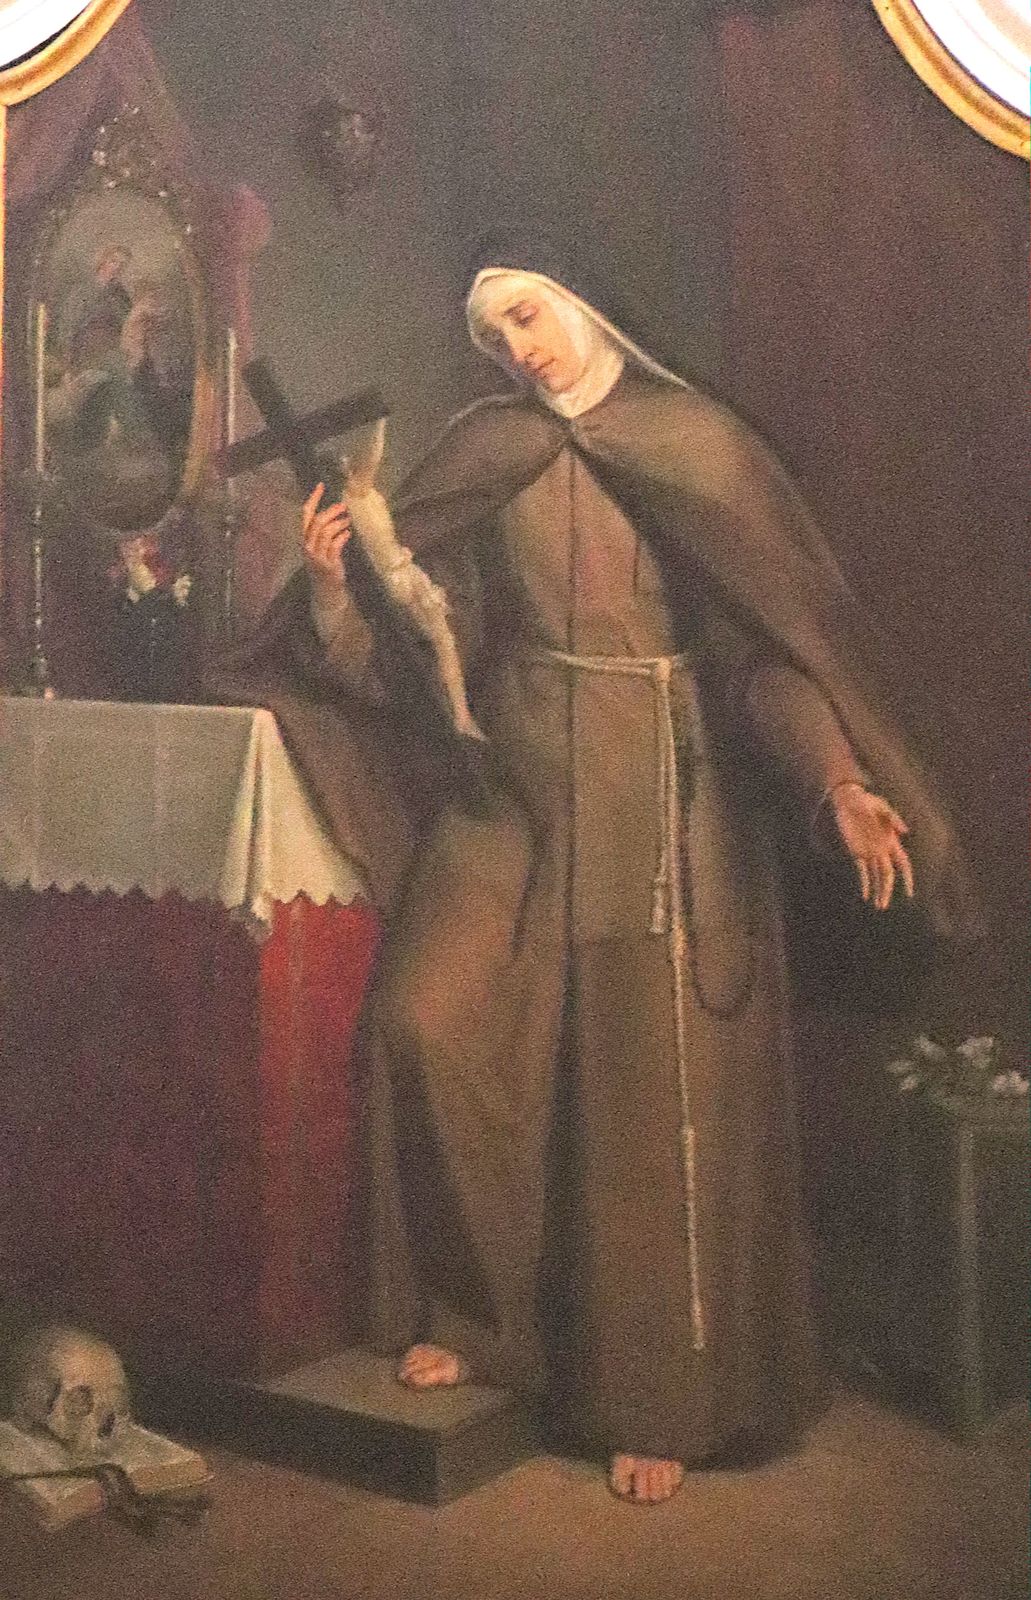 Biagio Molinari: Gemälde, 1860, in der Kathedrale in Troia bei Foggia